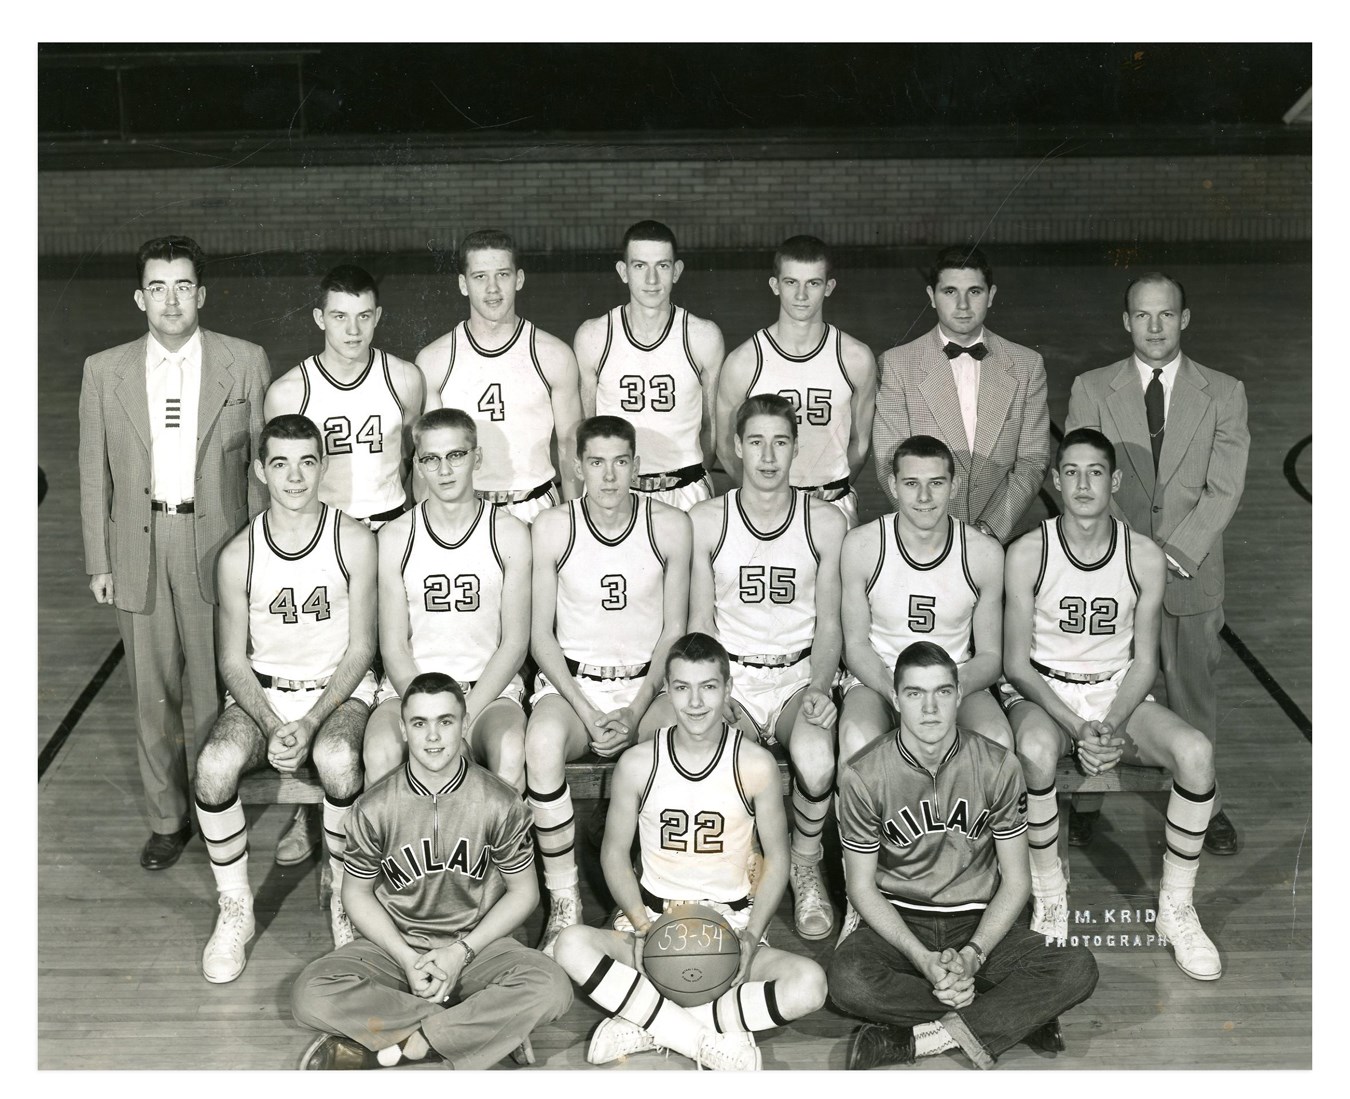 - 1954 Milan Basketball Team Photos and Program (4)